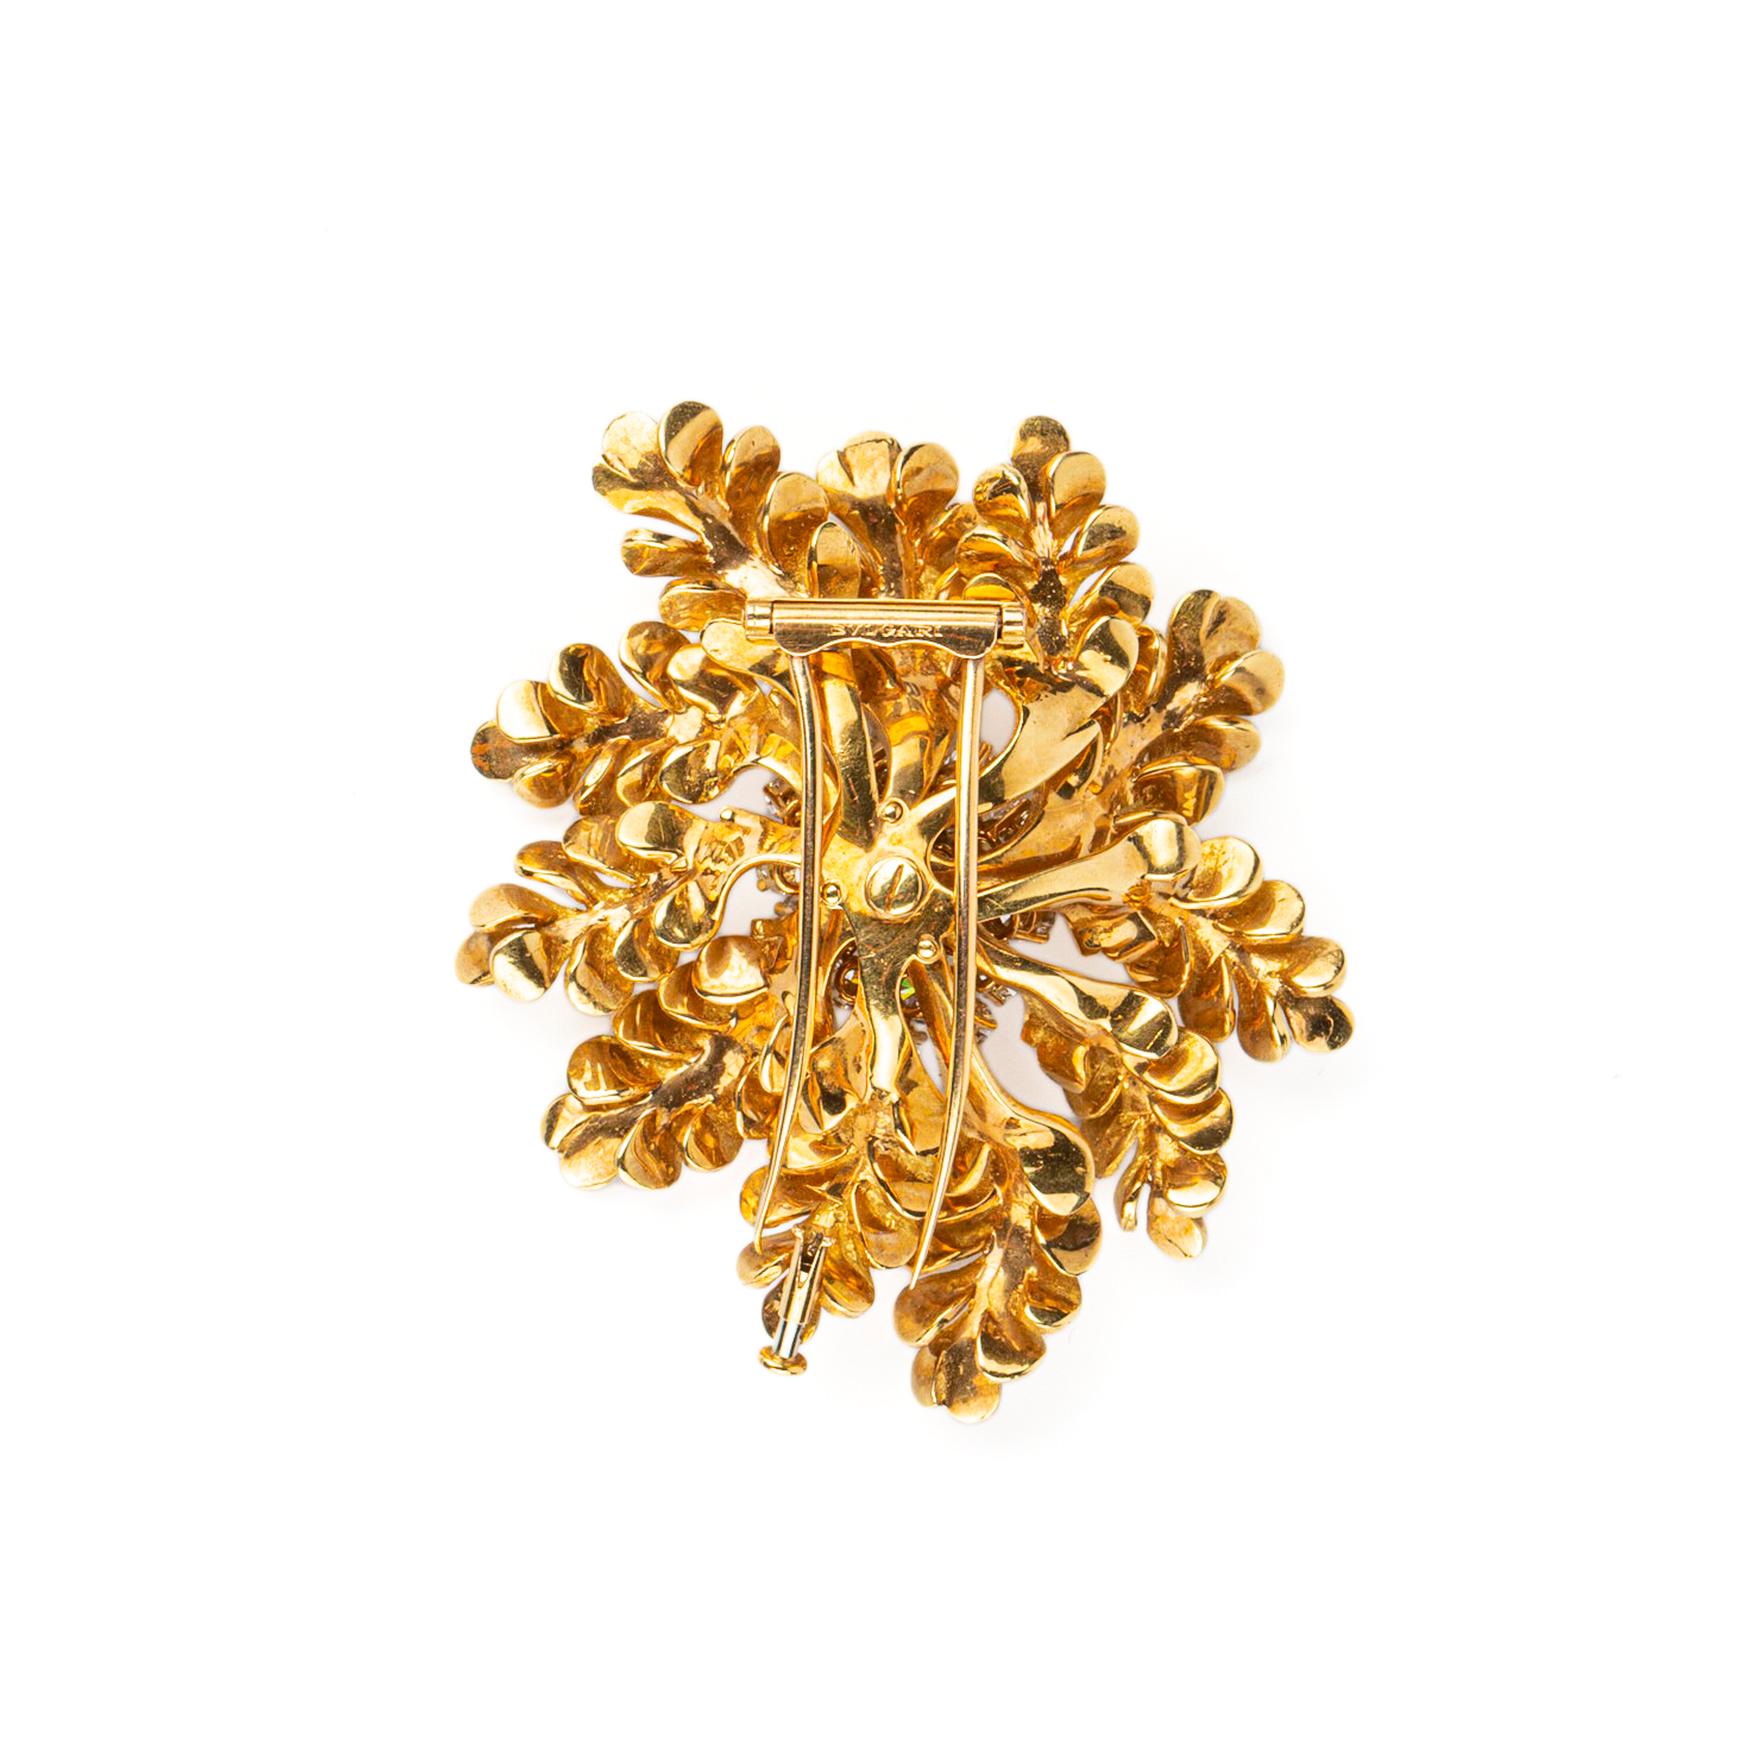 Brilliant Cut Bulgari Rare Yellow Gold and Diamond Floral Brooch 